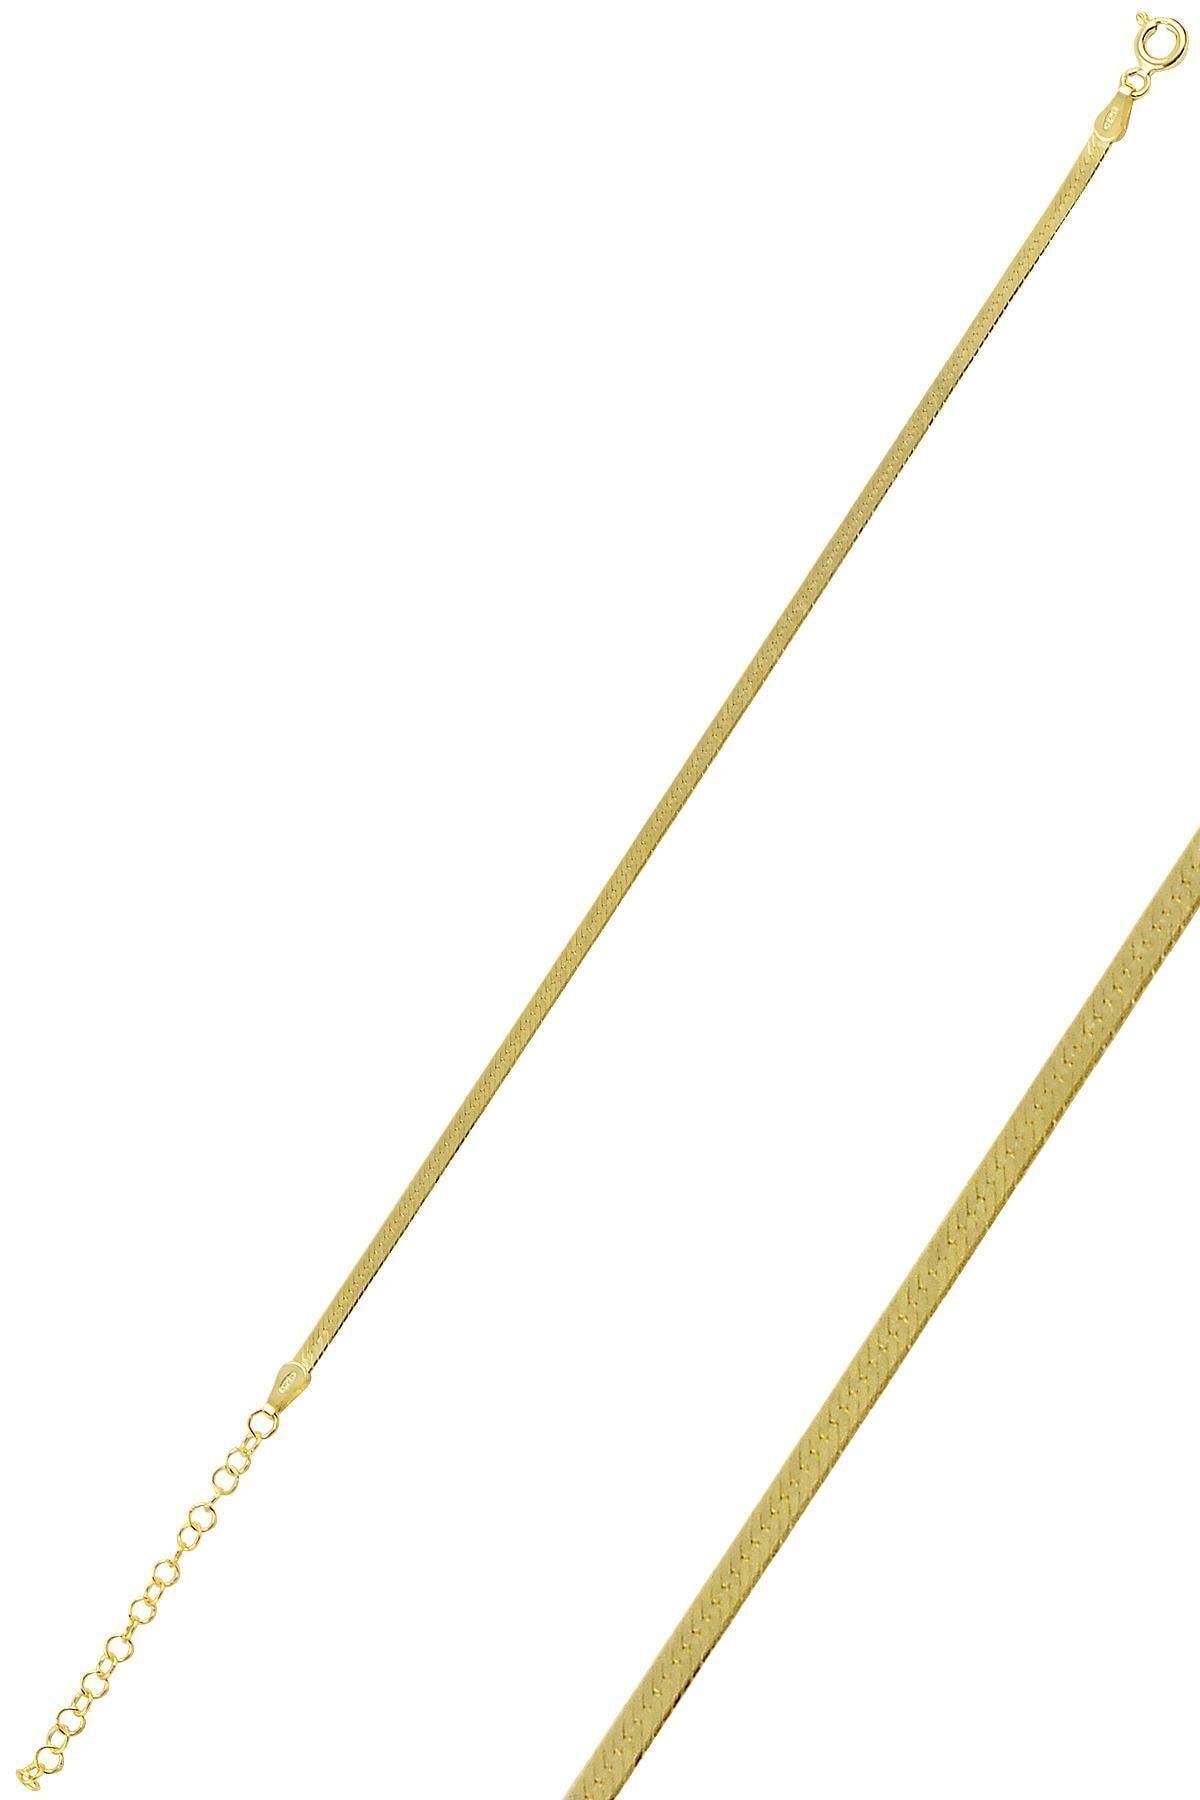 Söğütlü Silver Gümüş 2,5 Mm Kalınlığında Altın Rengi Italyan Yassı Modeli Bileklik Sgtl10097gold